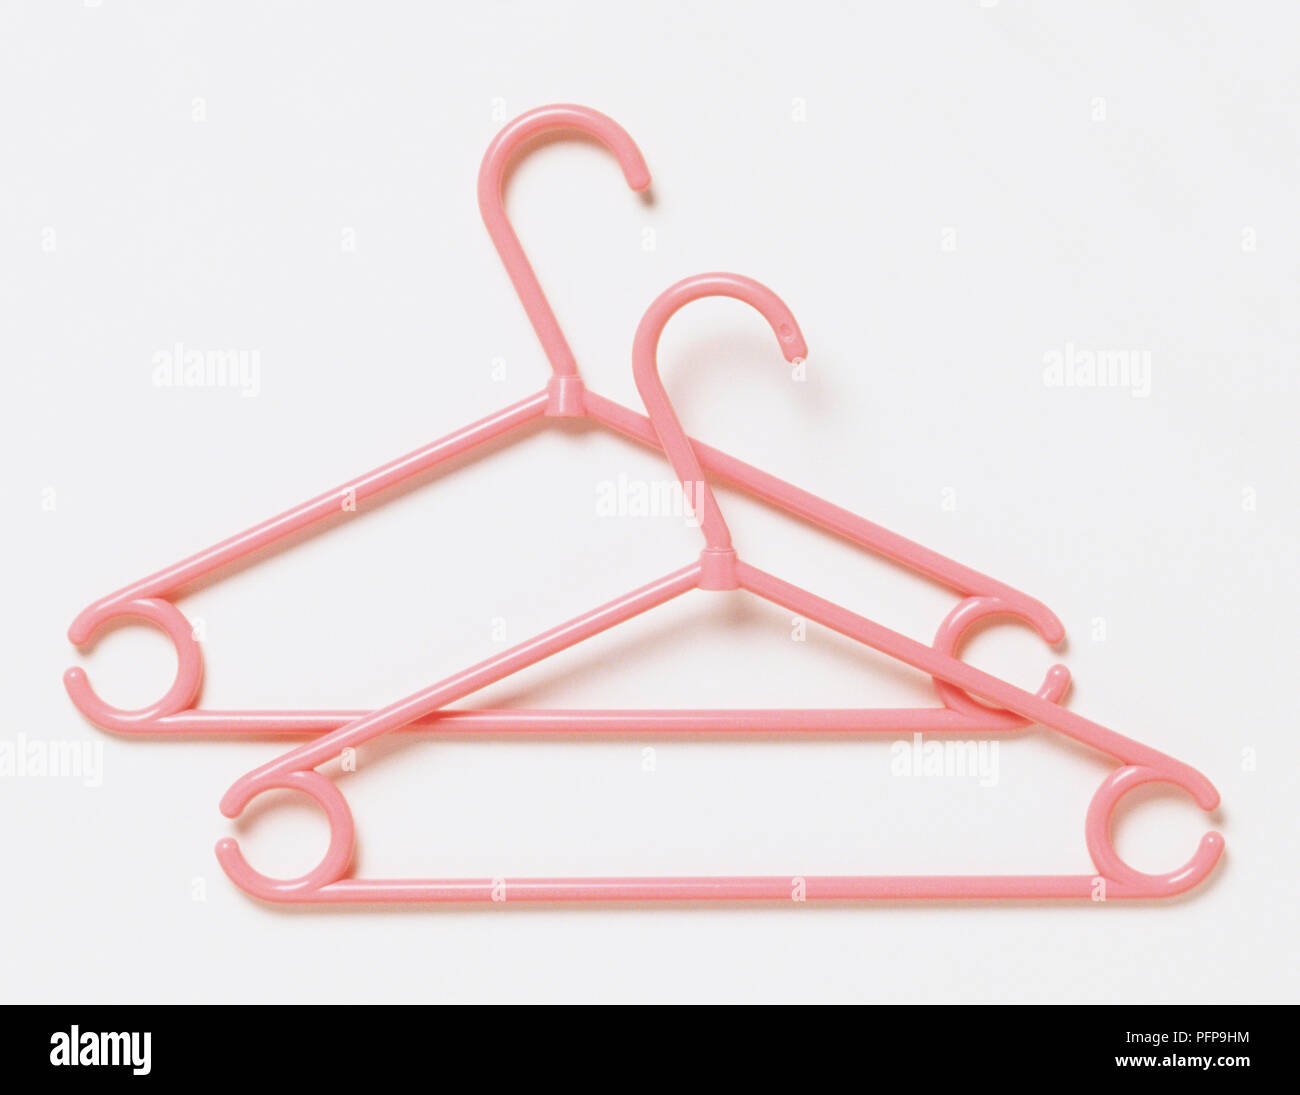 https://c8.alamy.com/comp/PFP9HM/two-pink-plastic-coat-hangers-PFP9HM.jpg